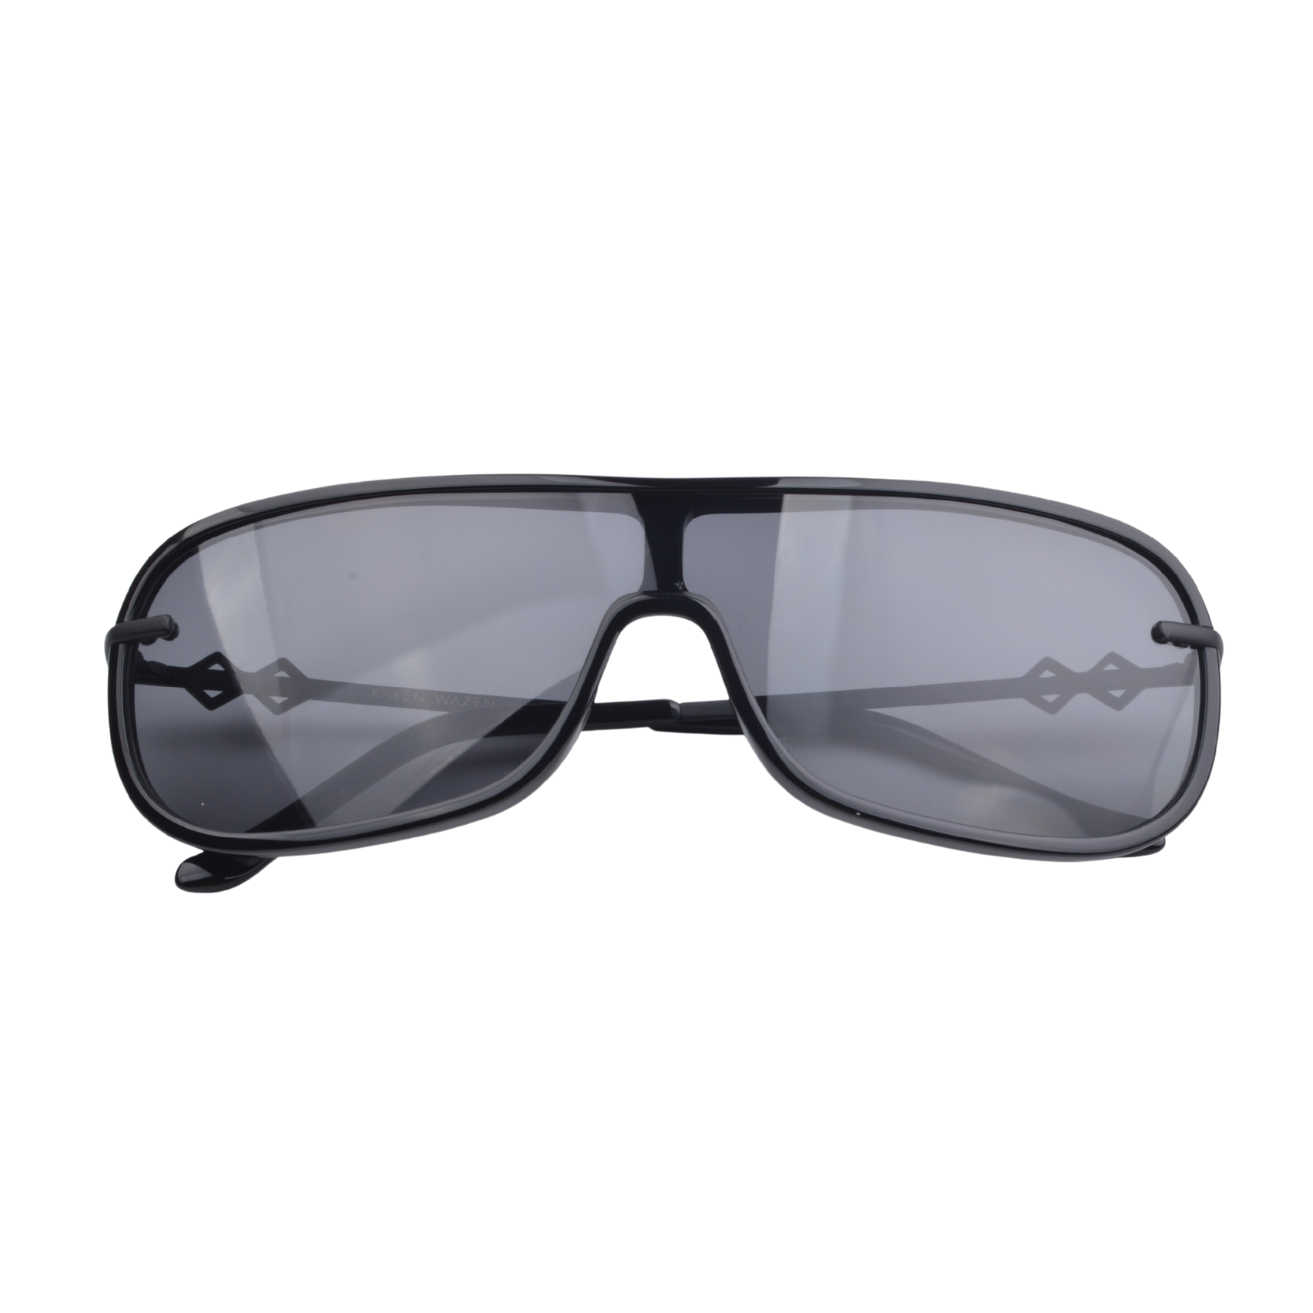 Front view | Mask sunglasses with black lenses and black frames | Acetate & Metal | Jordan | Women's sunglasses | Karen Wazen Eyewear